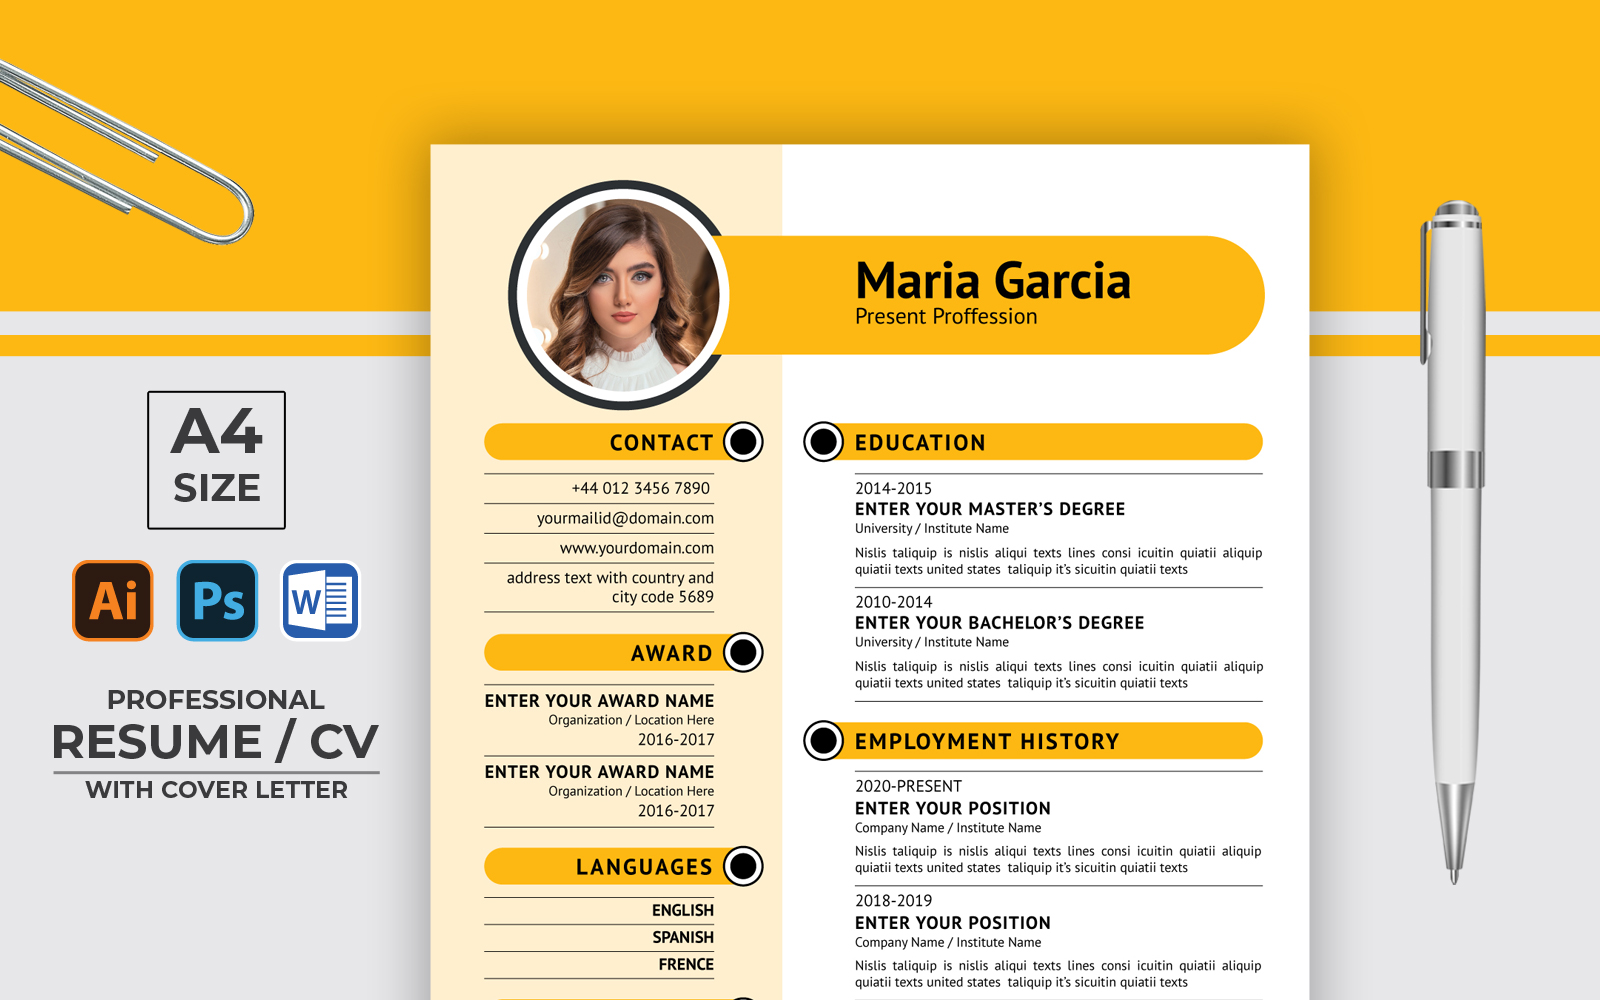 Maria Garcia Creative CV Resume Template